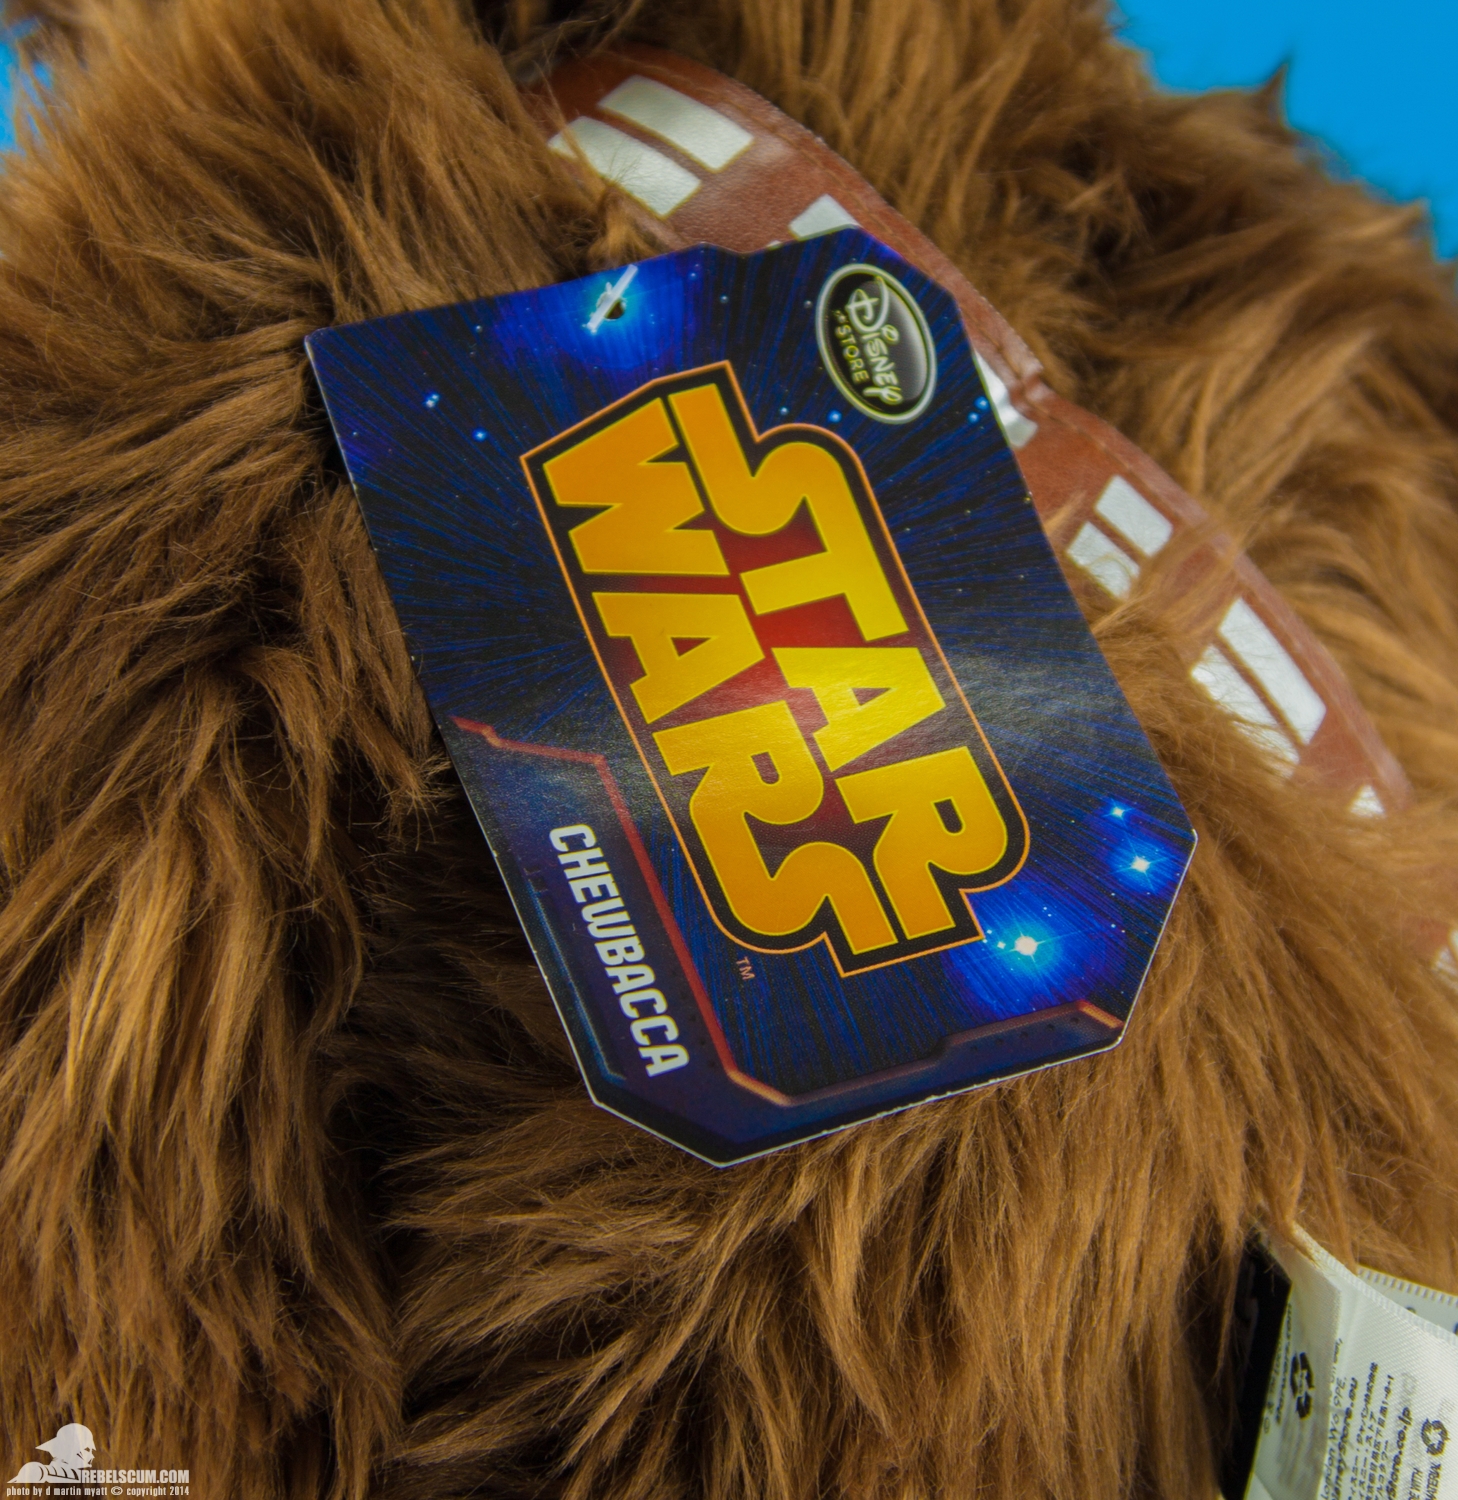 Disney-Store-Exclusive-Star-Wars-Plush-Wave-1-2014-011.jpg